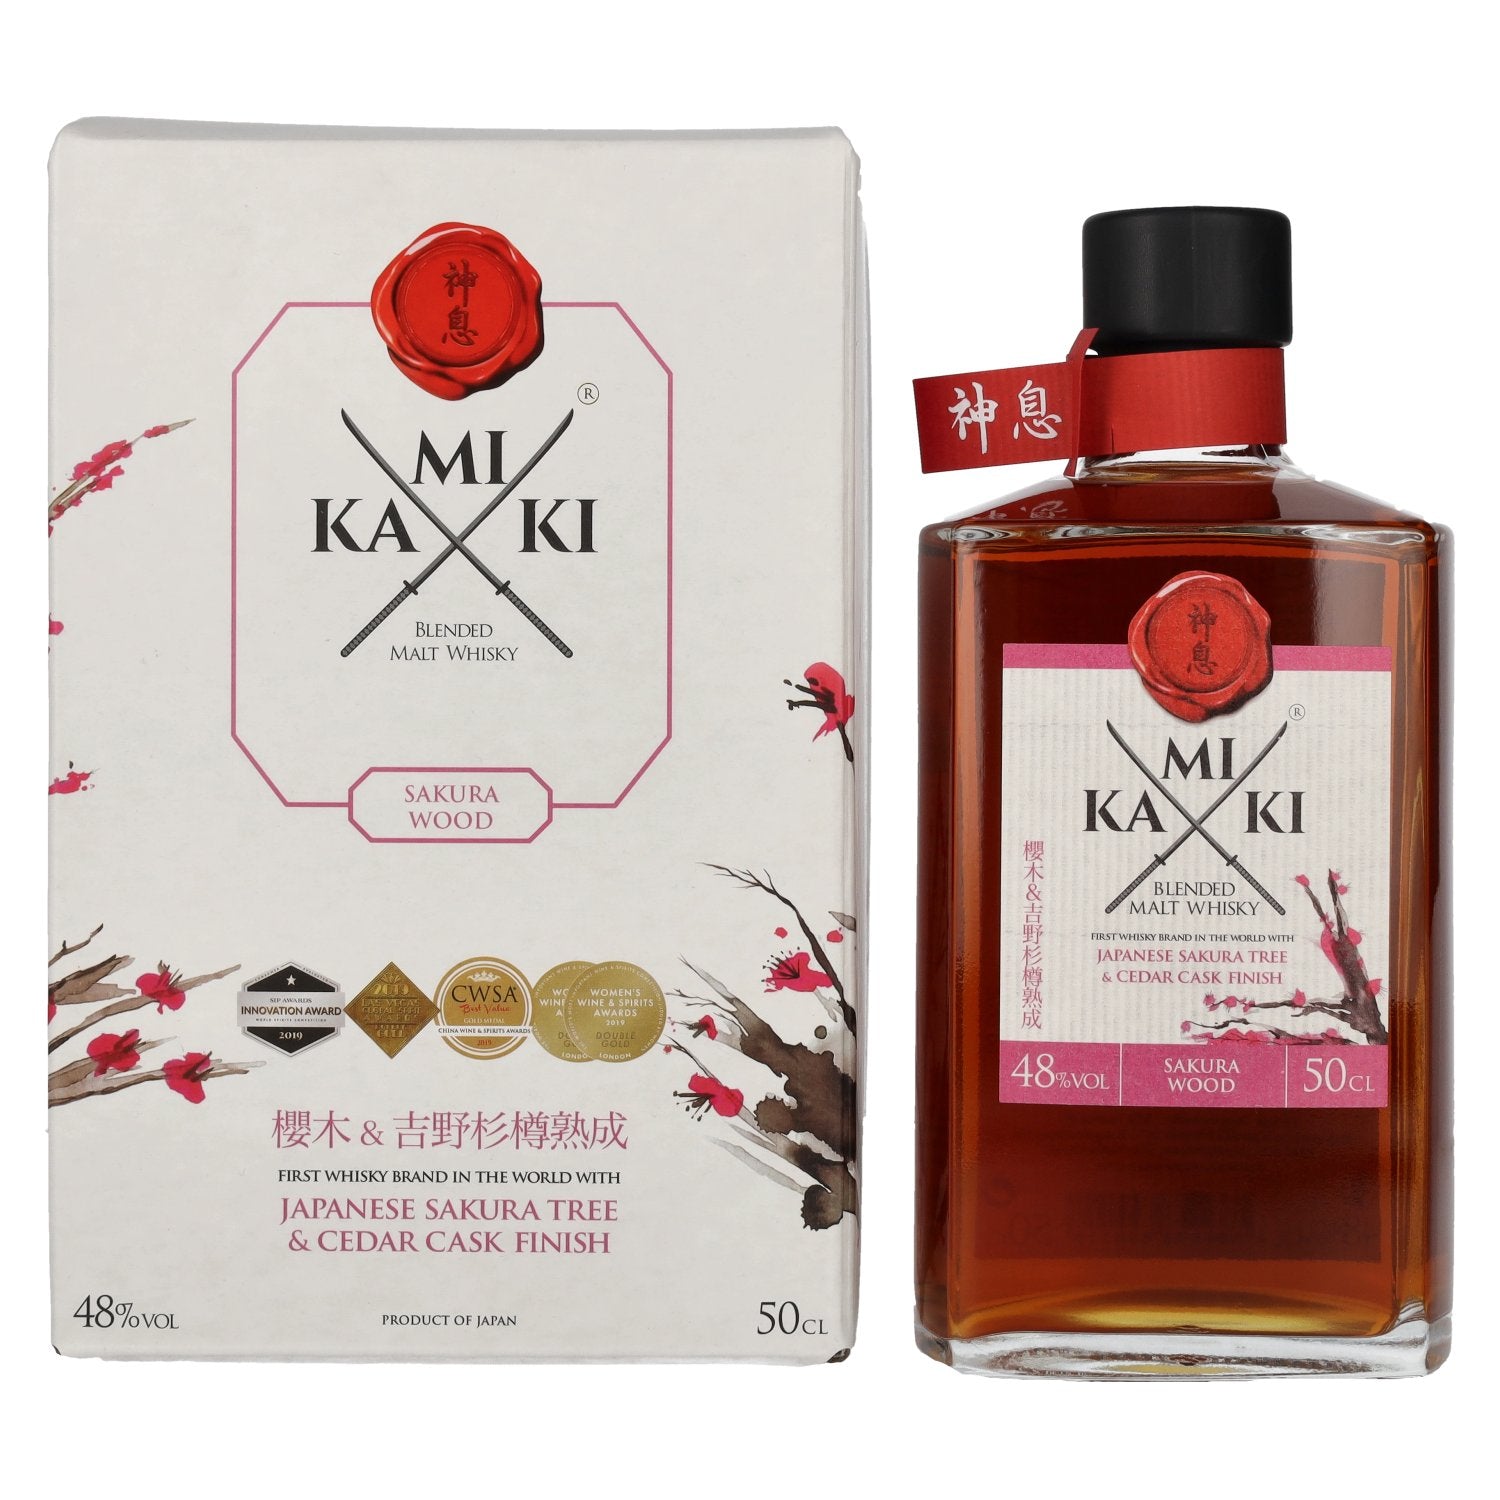 KAMIKI Blended Malt Whisky SAKURA & CEDAR Cask Finish 48% Vol. 0,5l in Giftbox